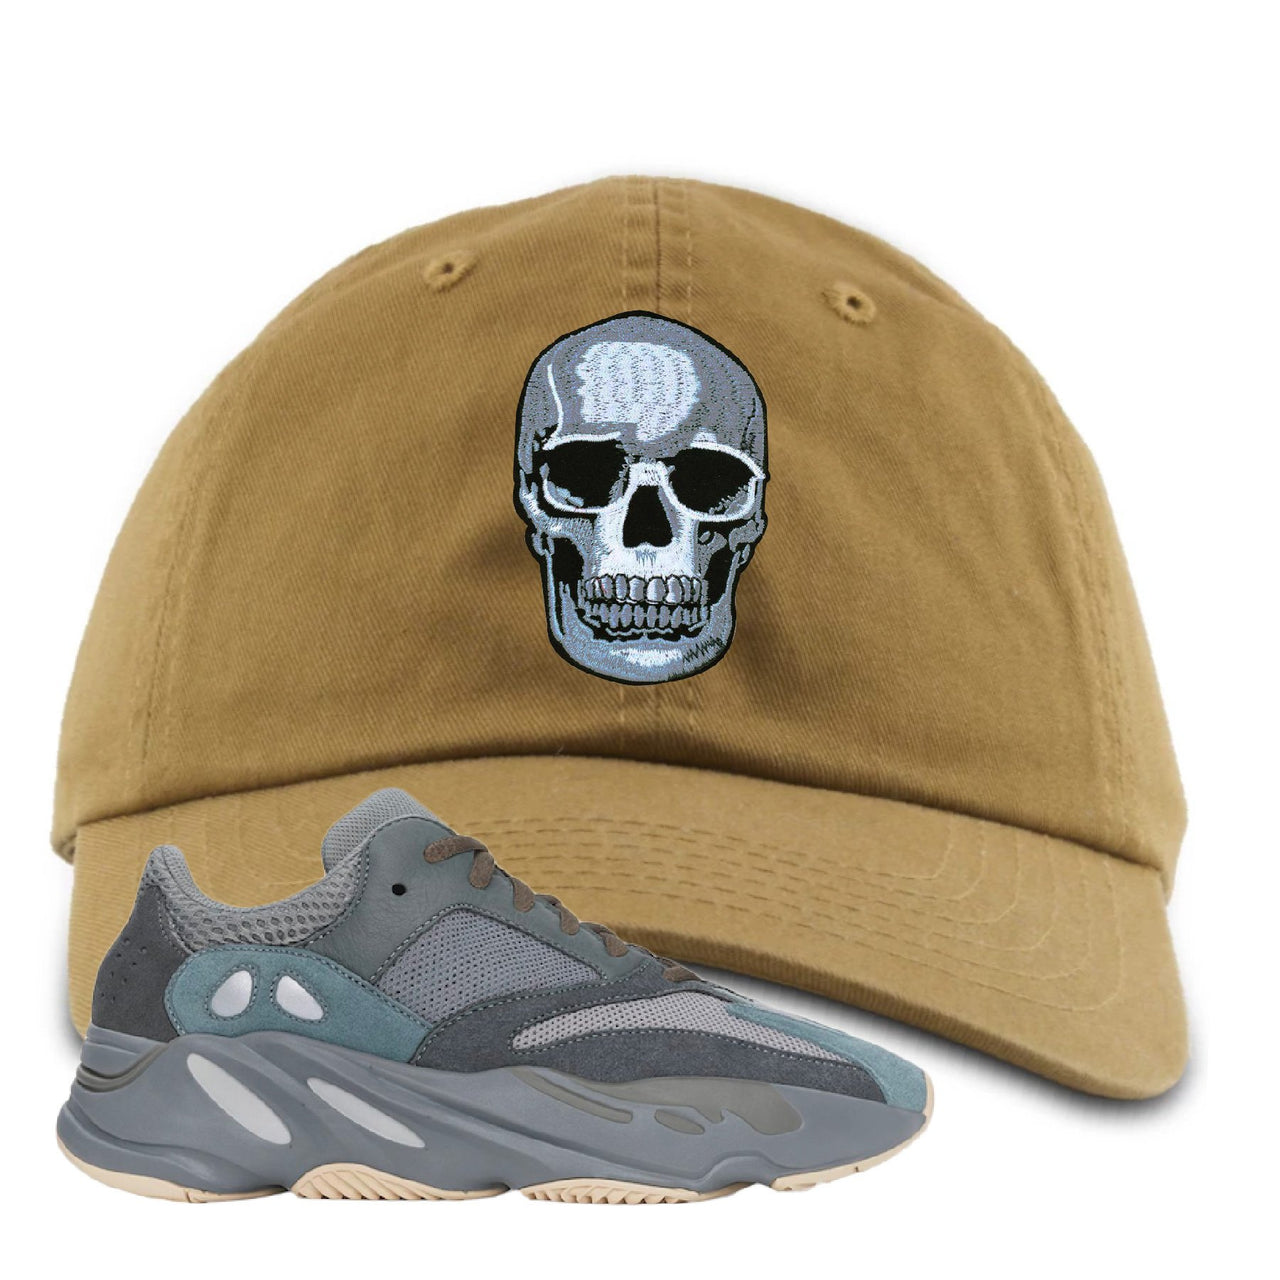 Yeezy Boost 700 Teal Blue Skull Timberland Sneaker Hook Up Dad Hat